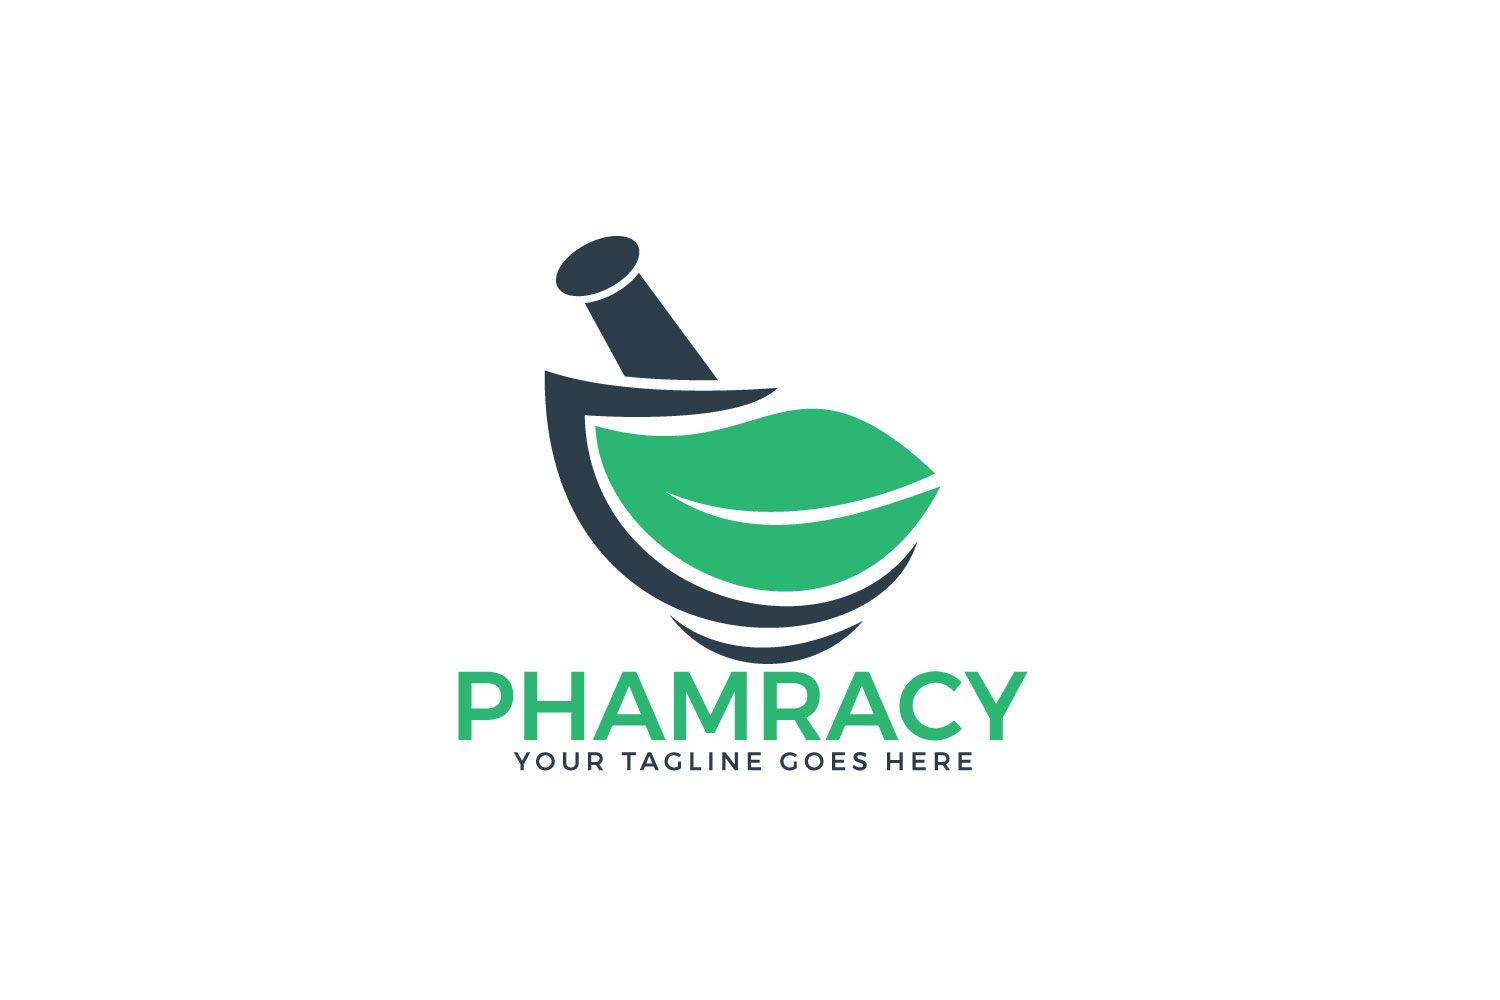 Mortar Logo - Pharmacy medical logo. Natural mortar and pestle logo.